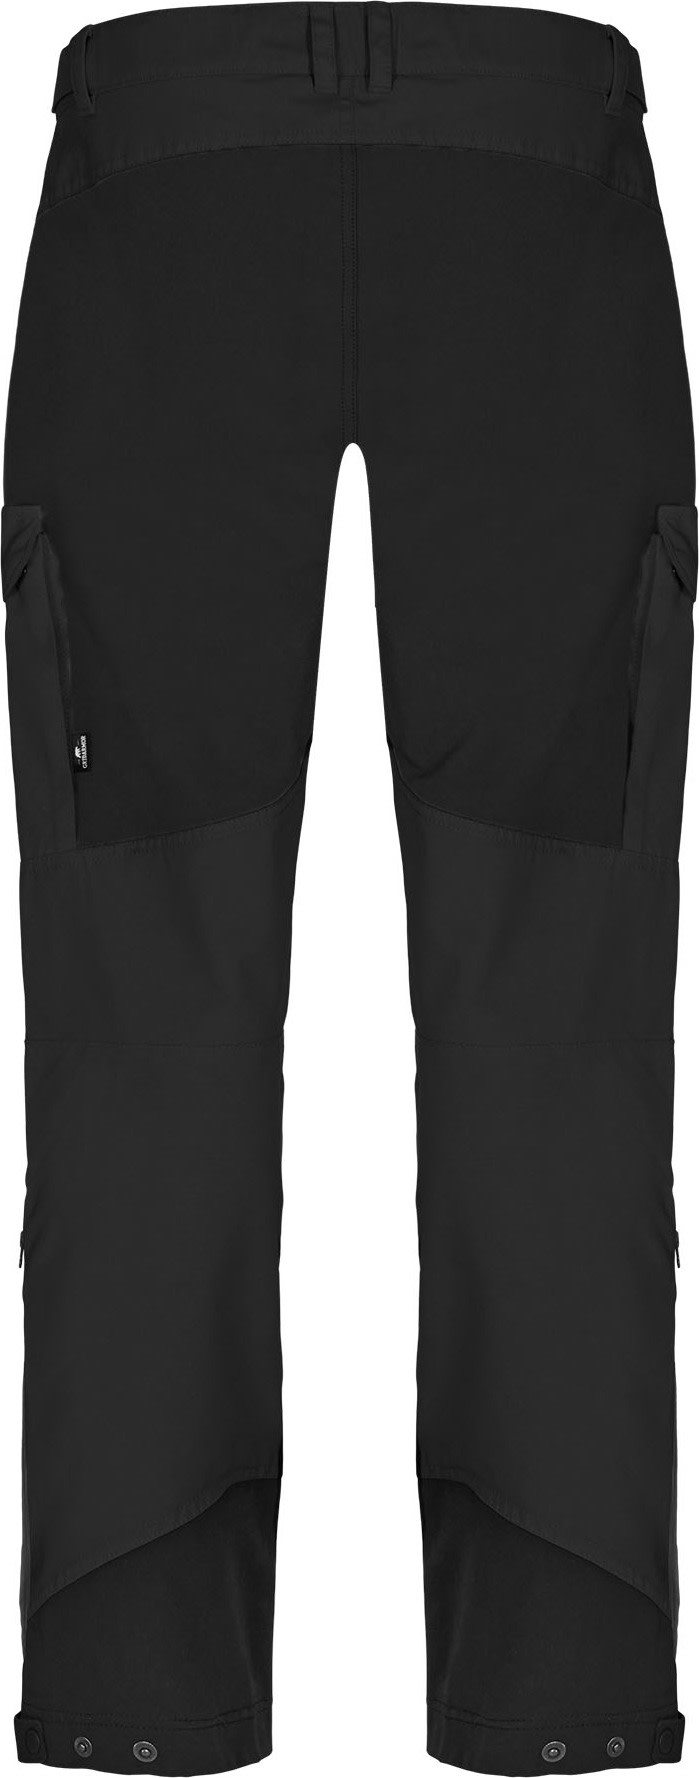 Nike Radical Tight Womens Active Pants Size M, Color: Black/Crismon 